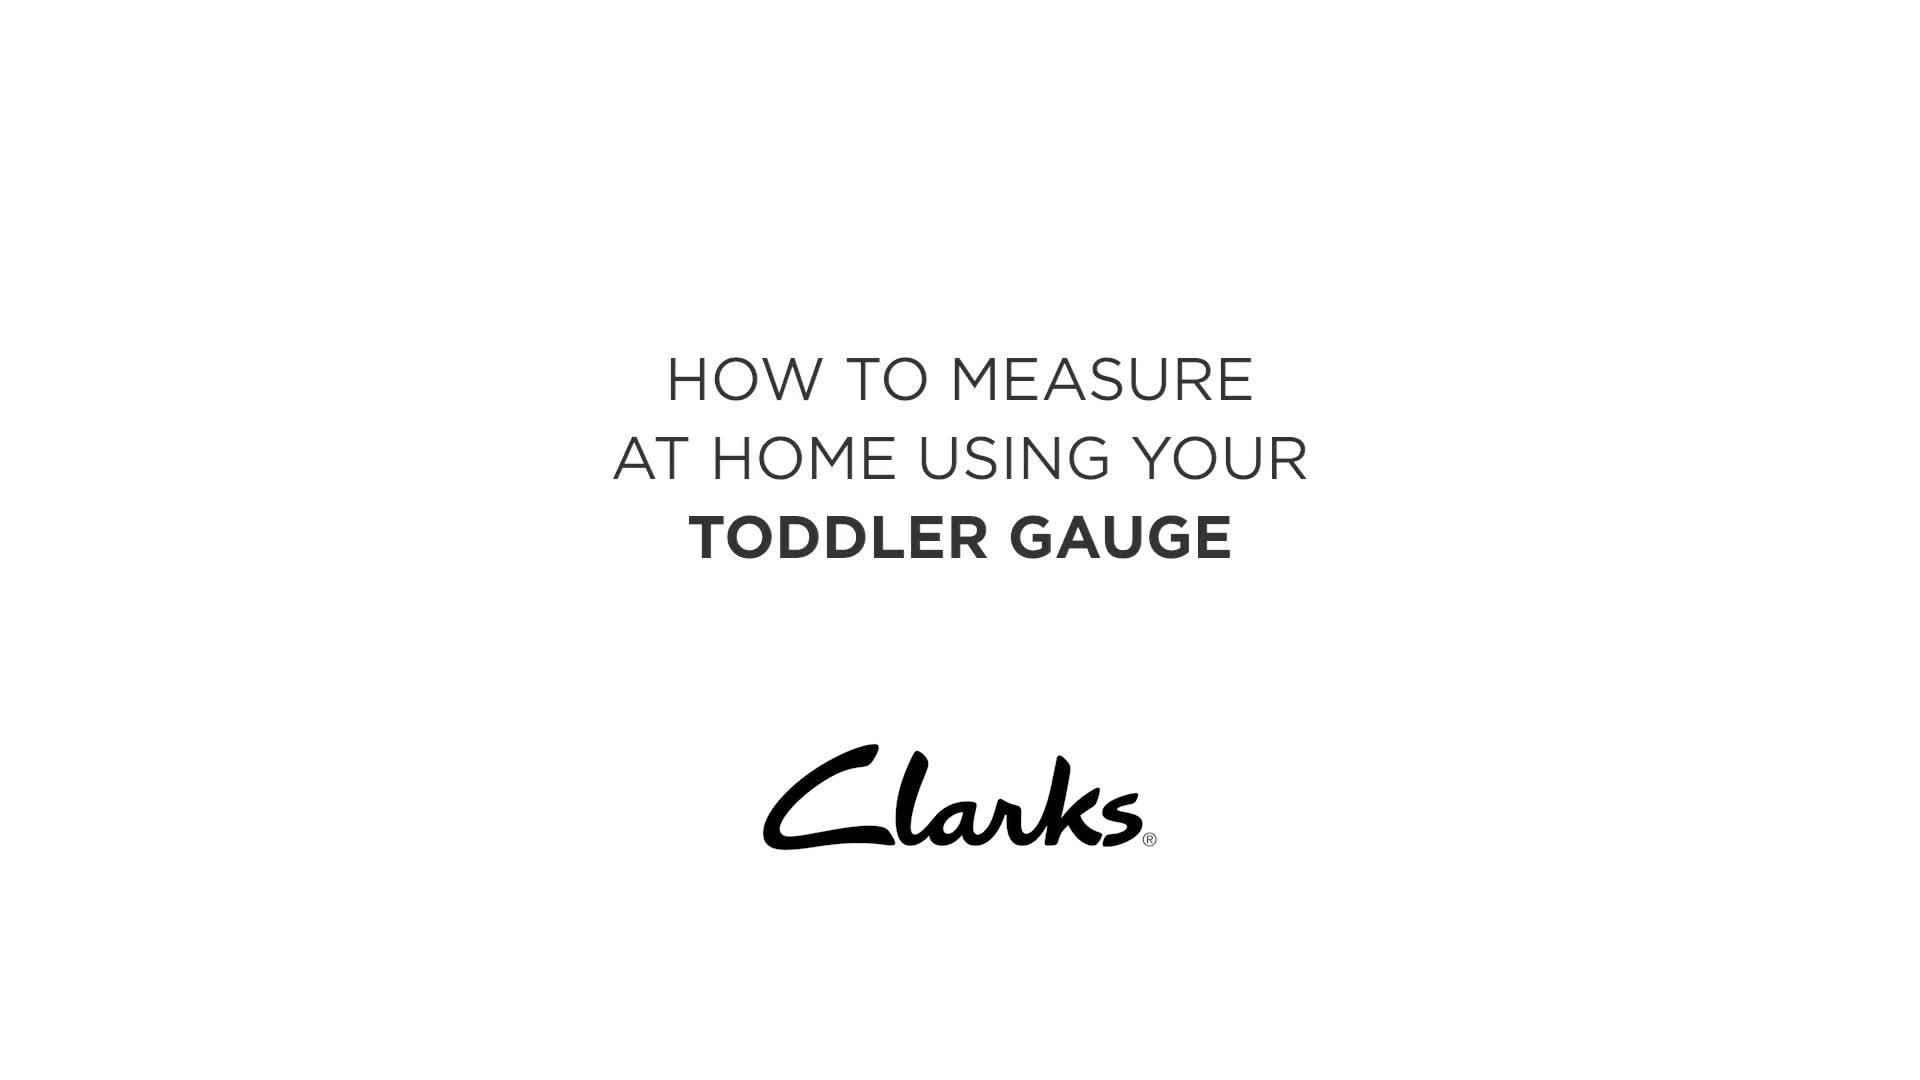 clarks kids measure